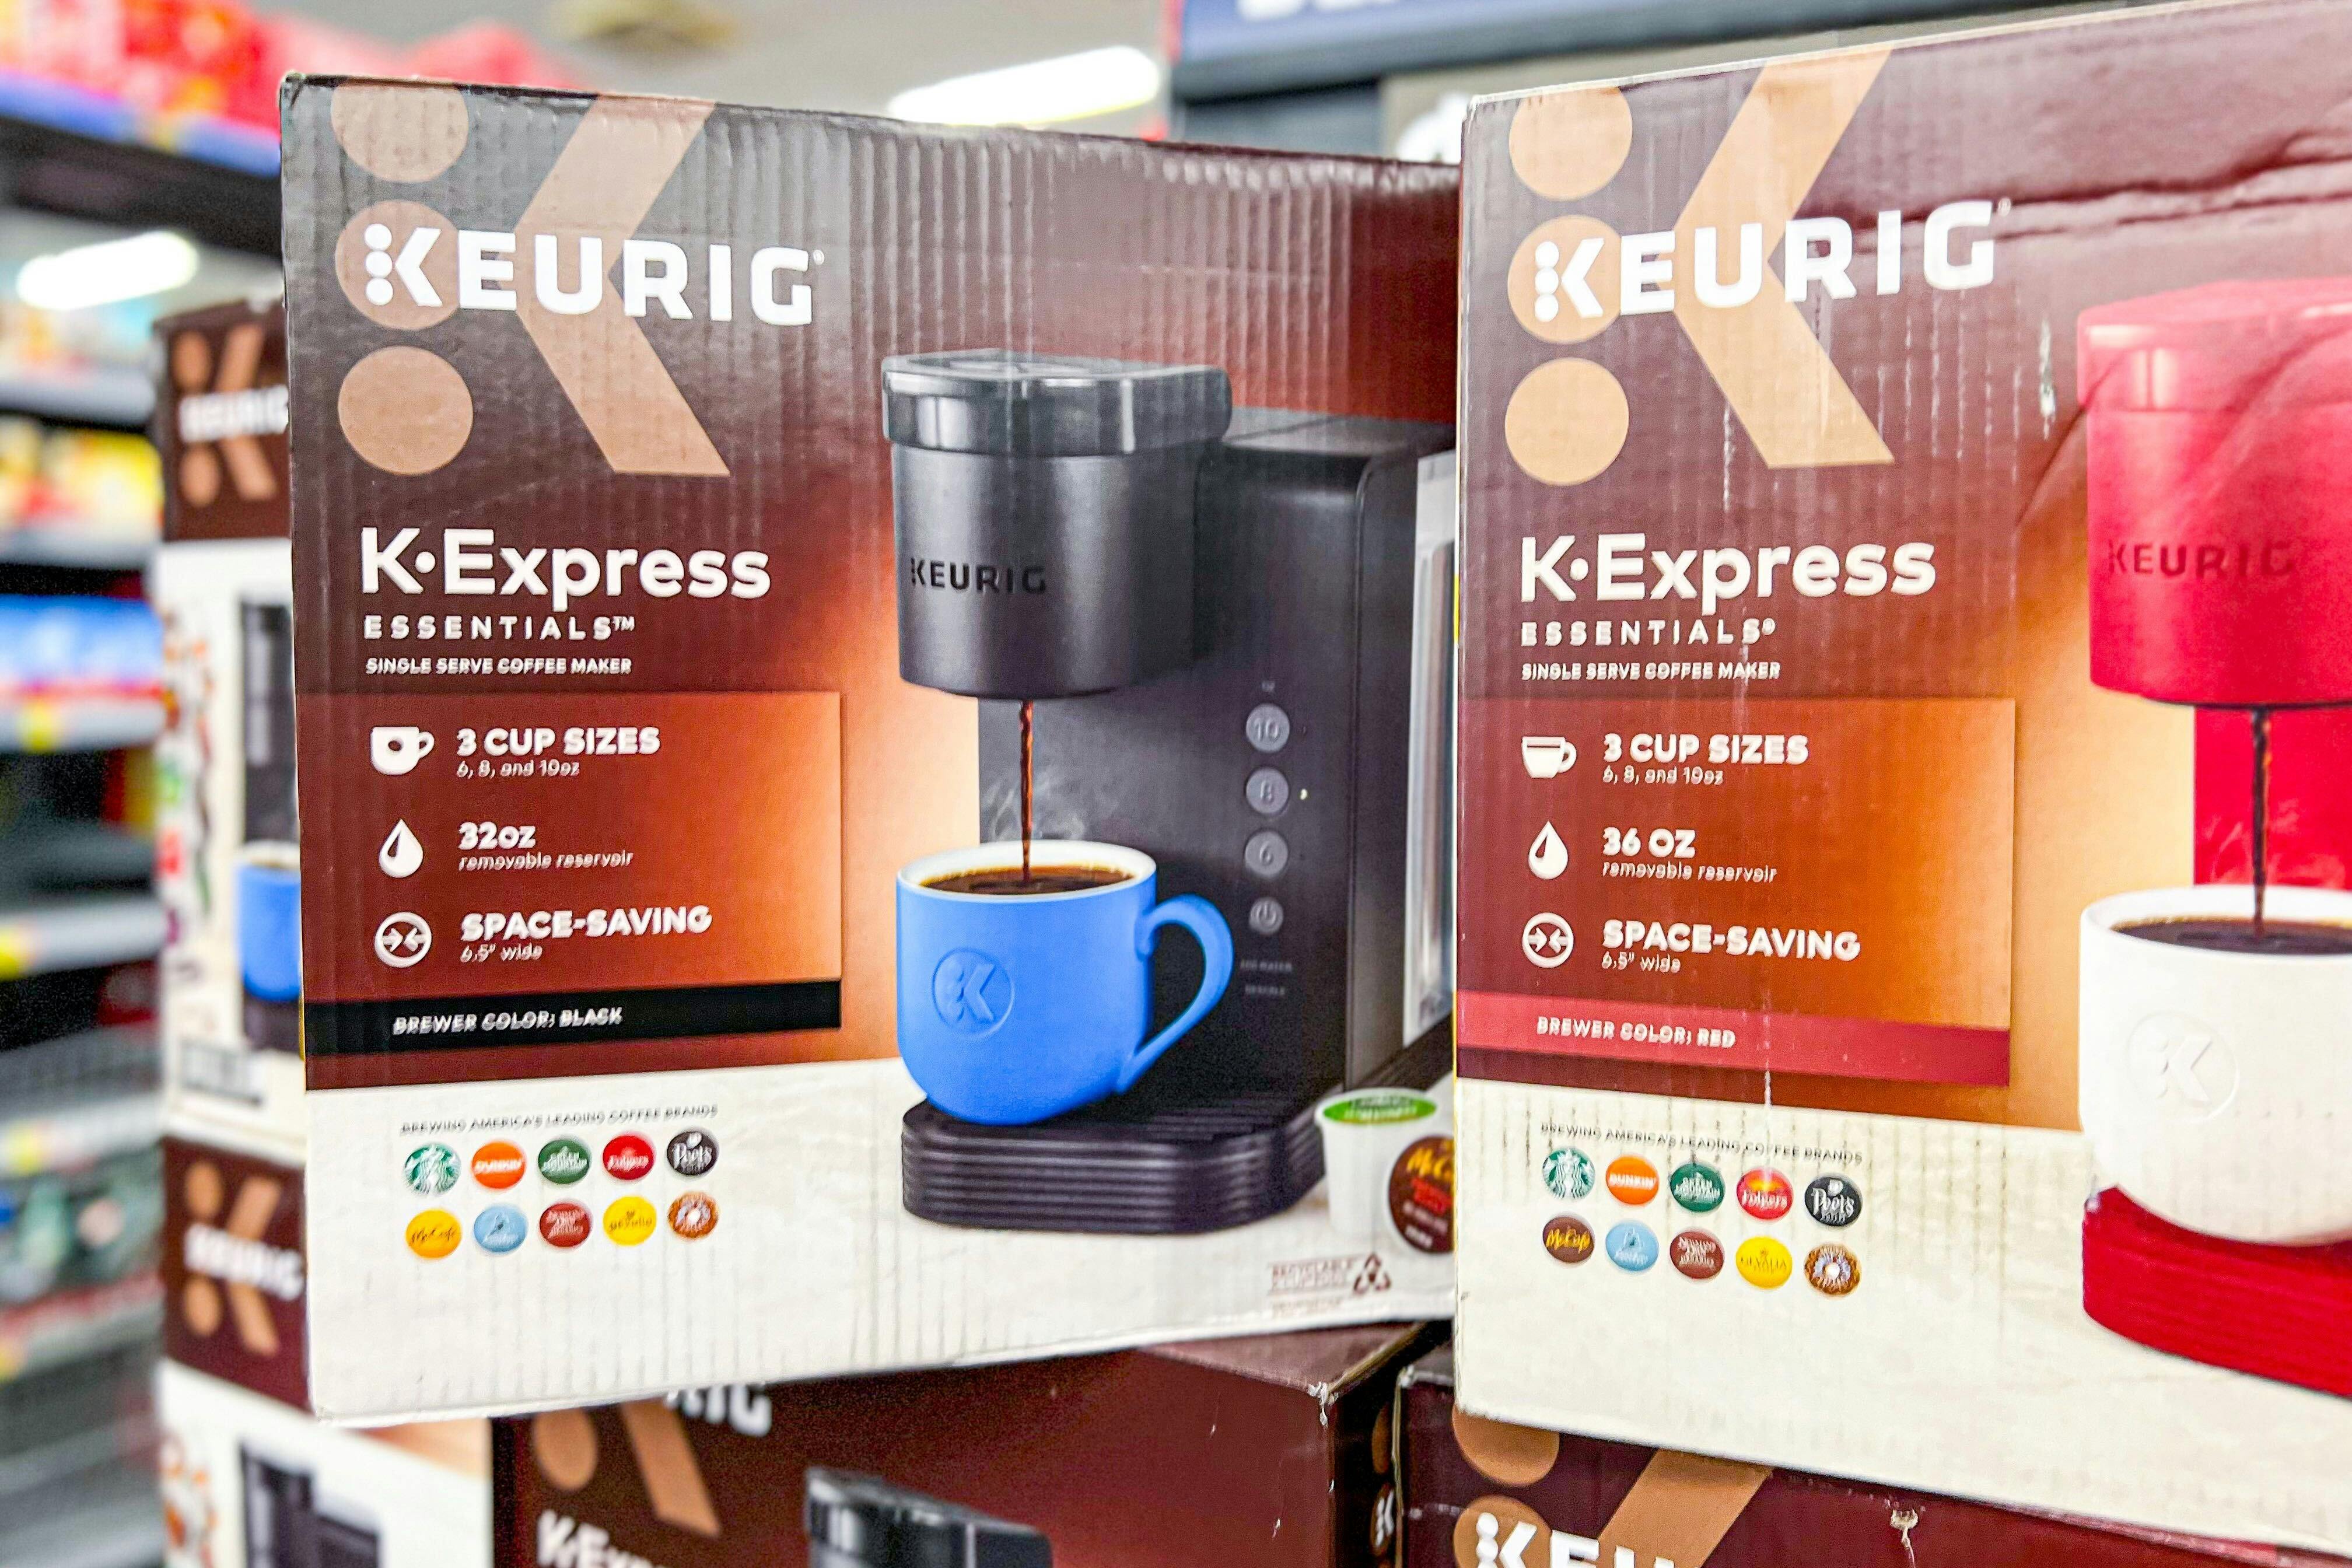 Keurig® K-Slim Single Serve Coffee Maker - Black, 1 ct - City Market